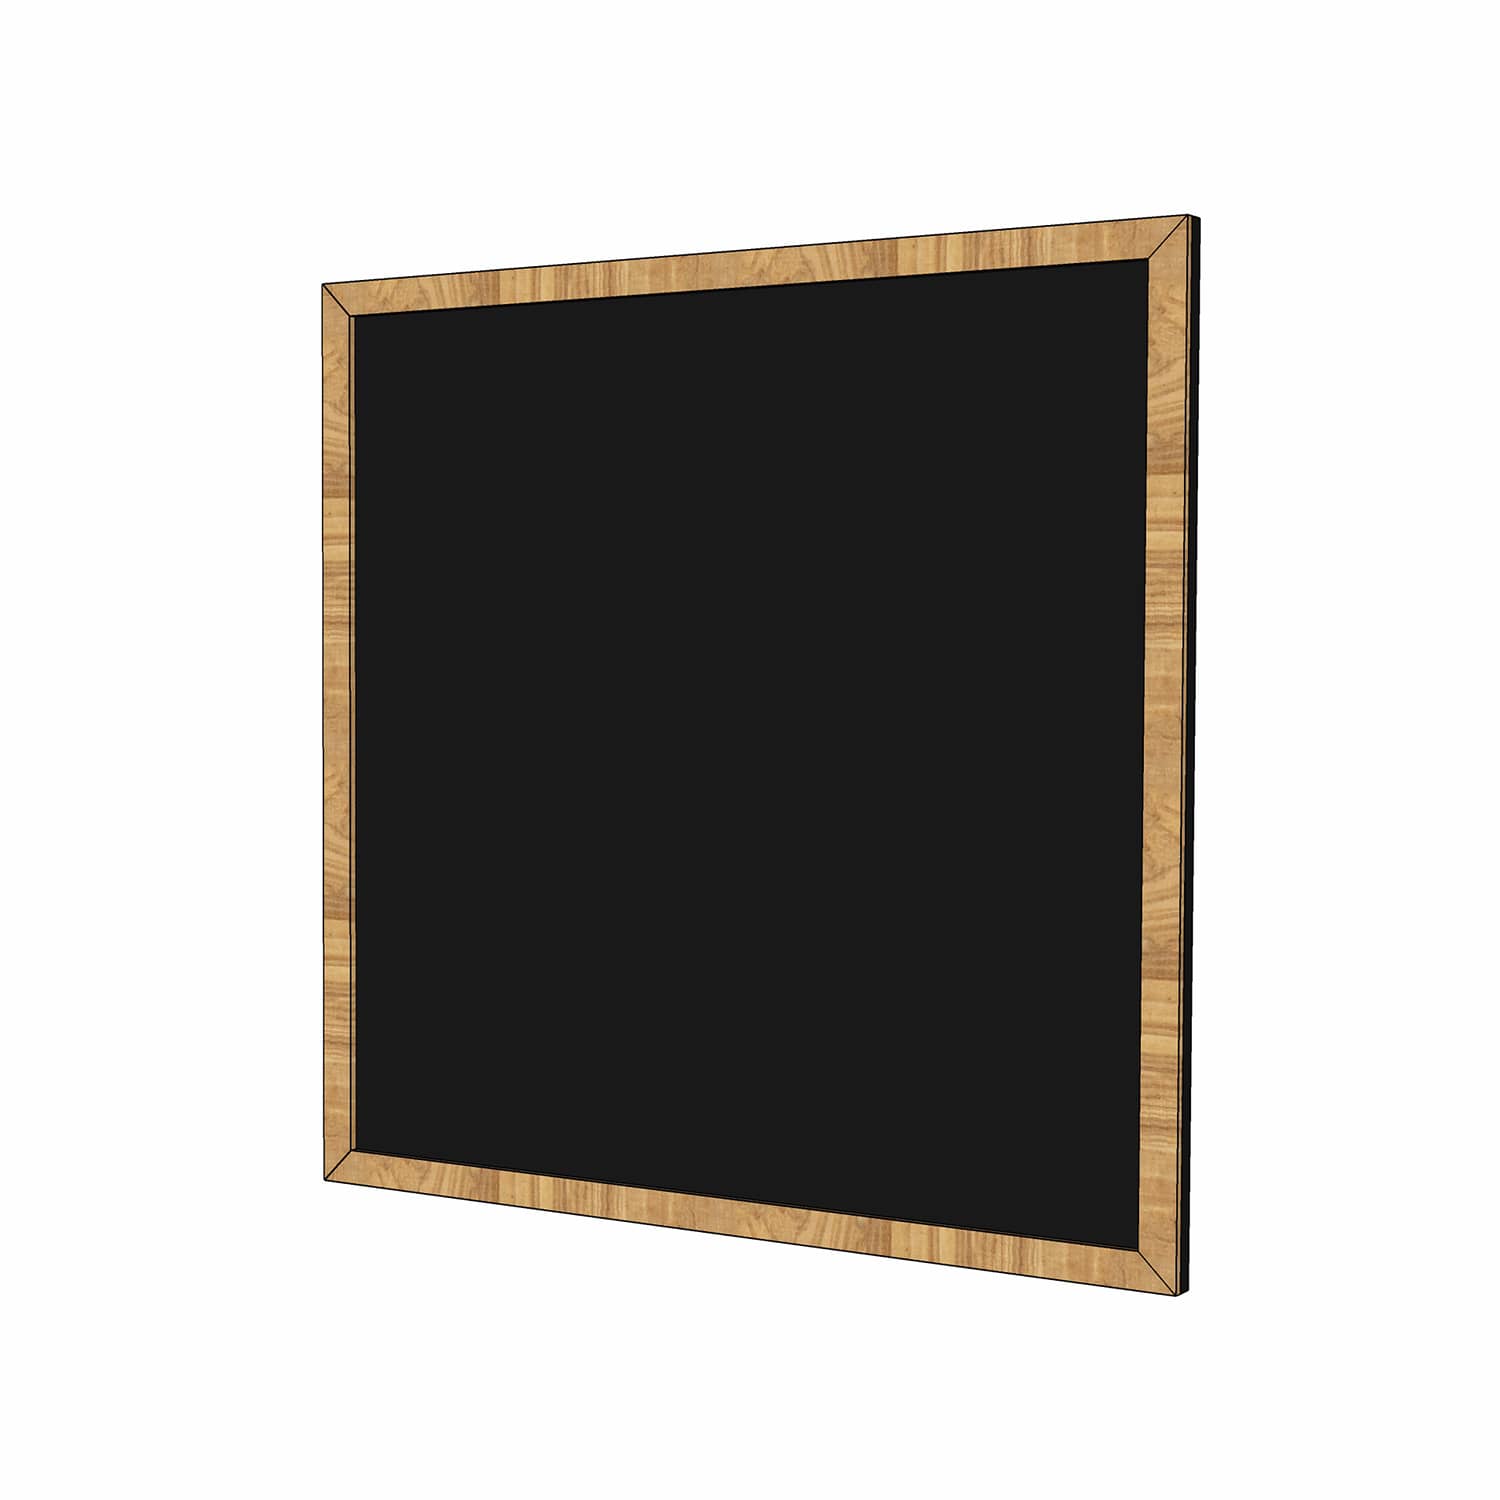 1200 x 1200mm framed with hardwood outdoor blackboard